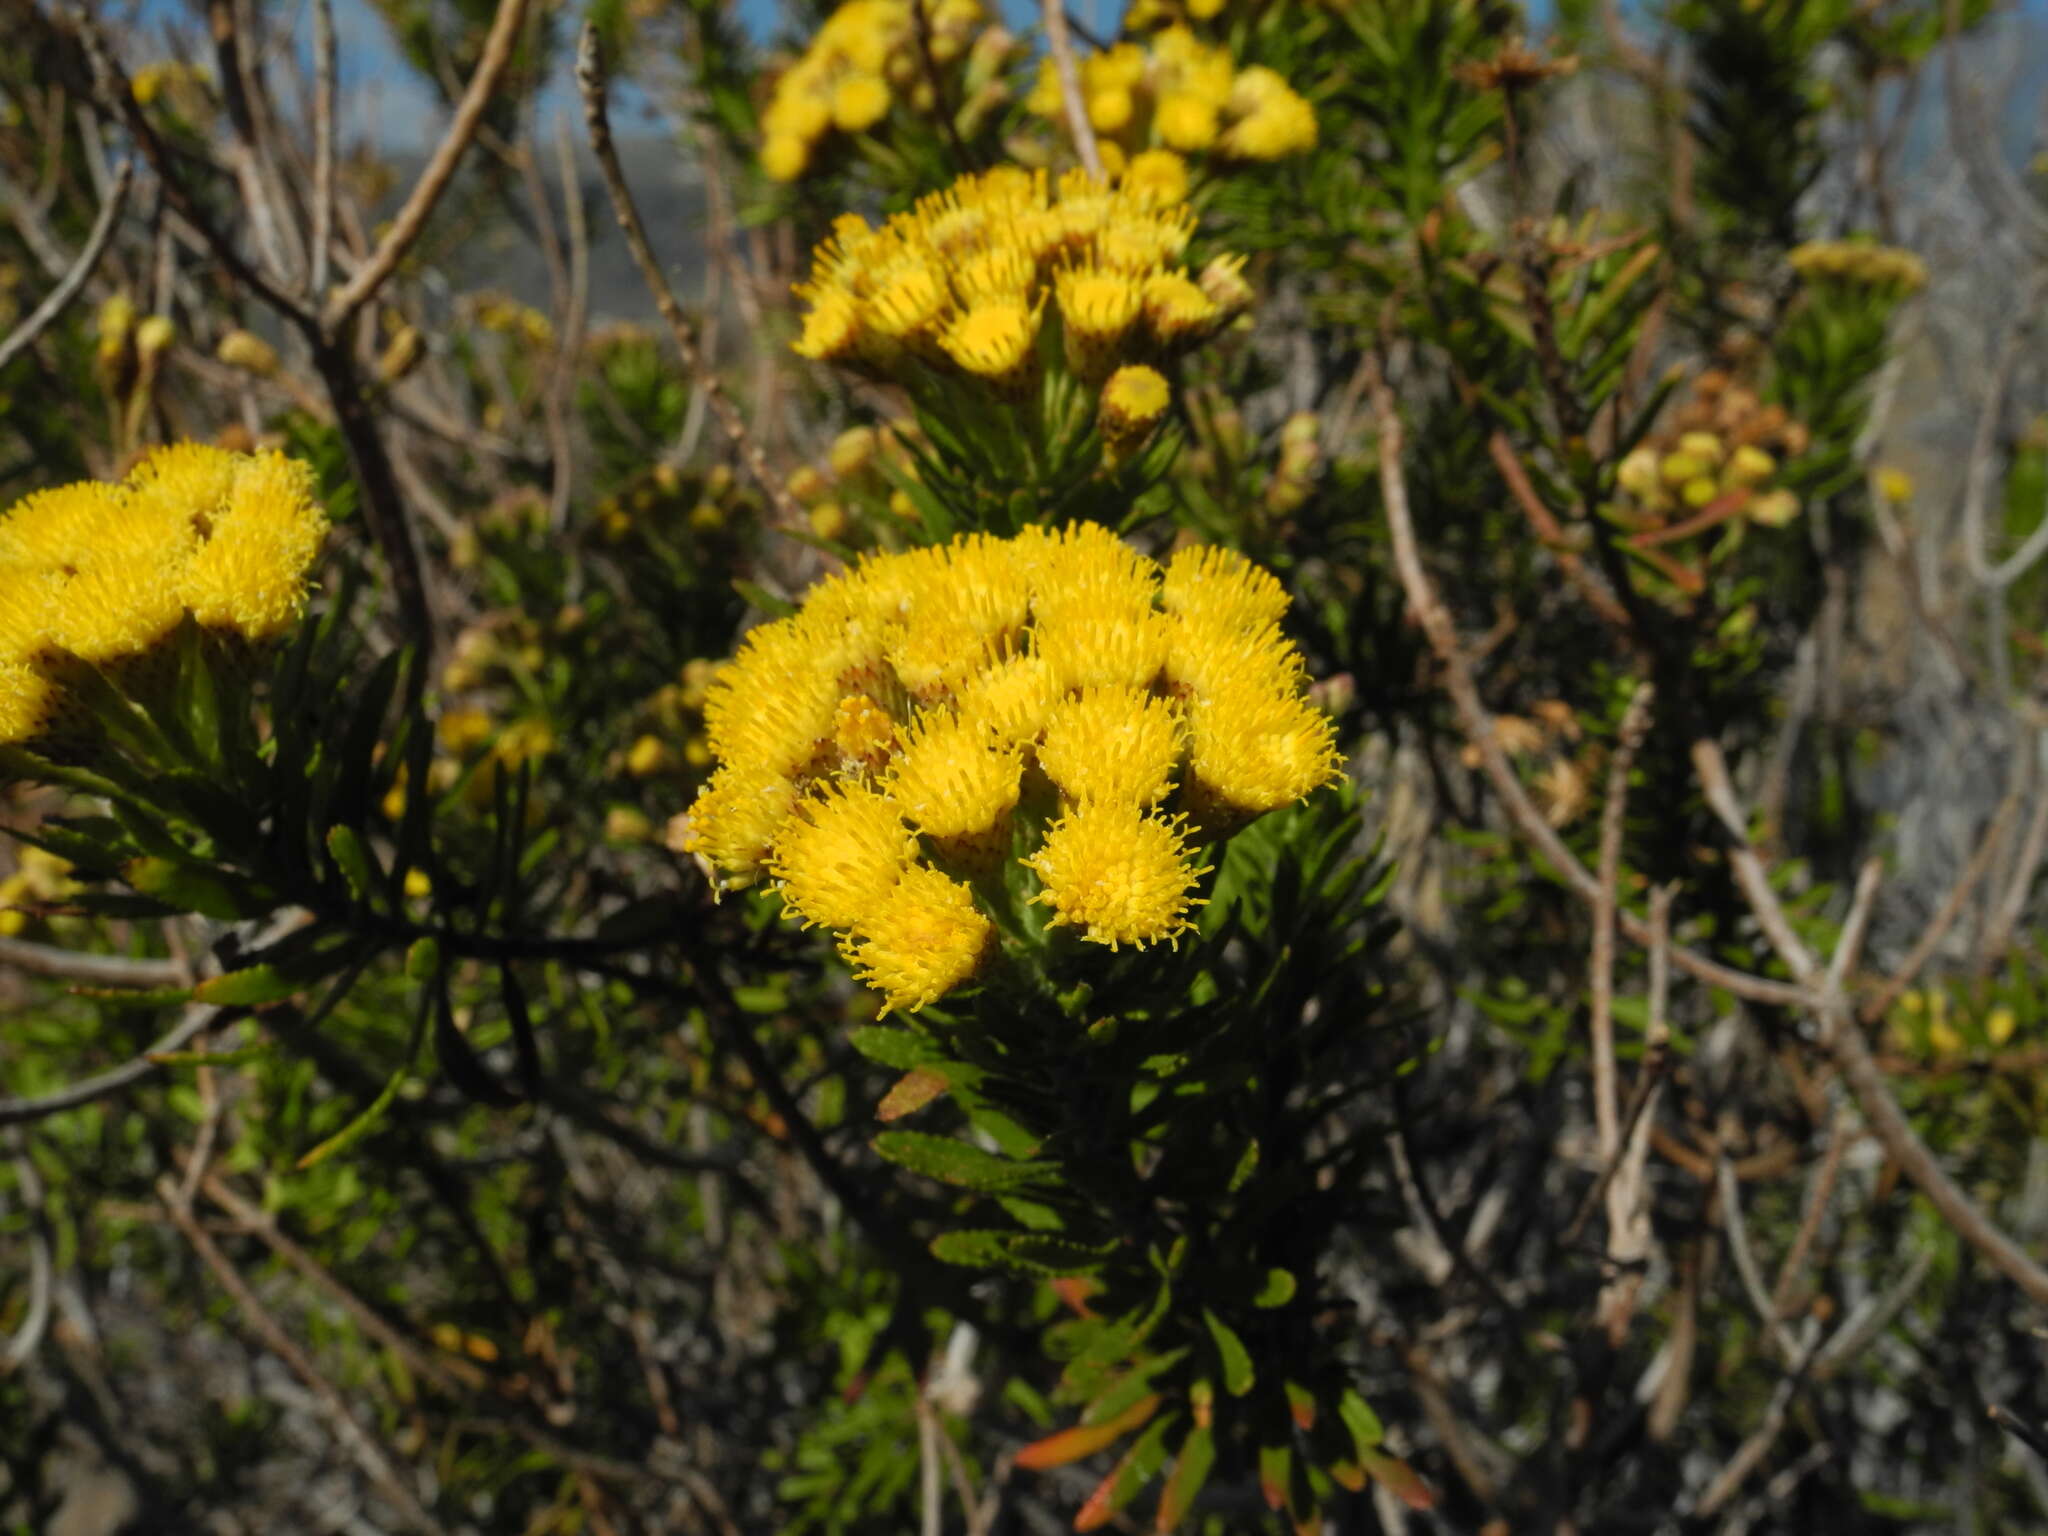 Image de Allagopappus canariensis (Willd.) Greuter